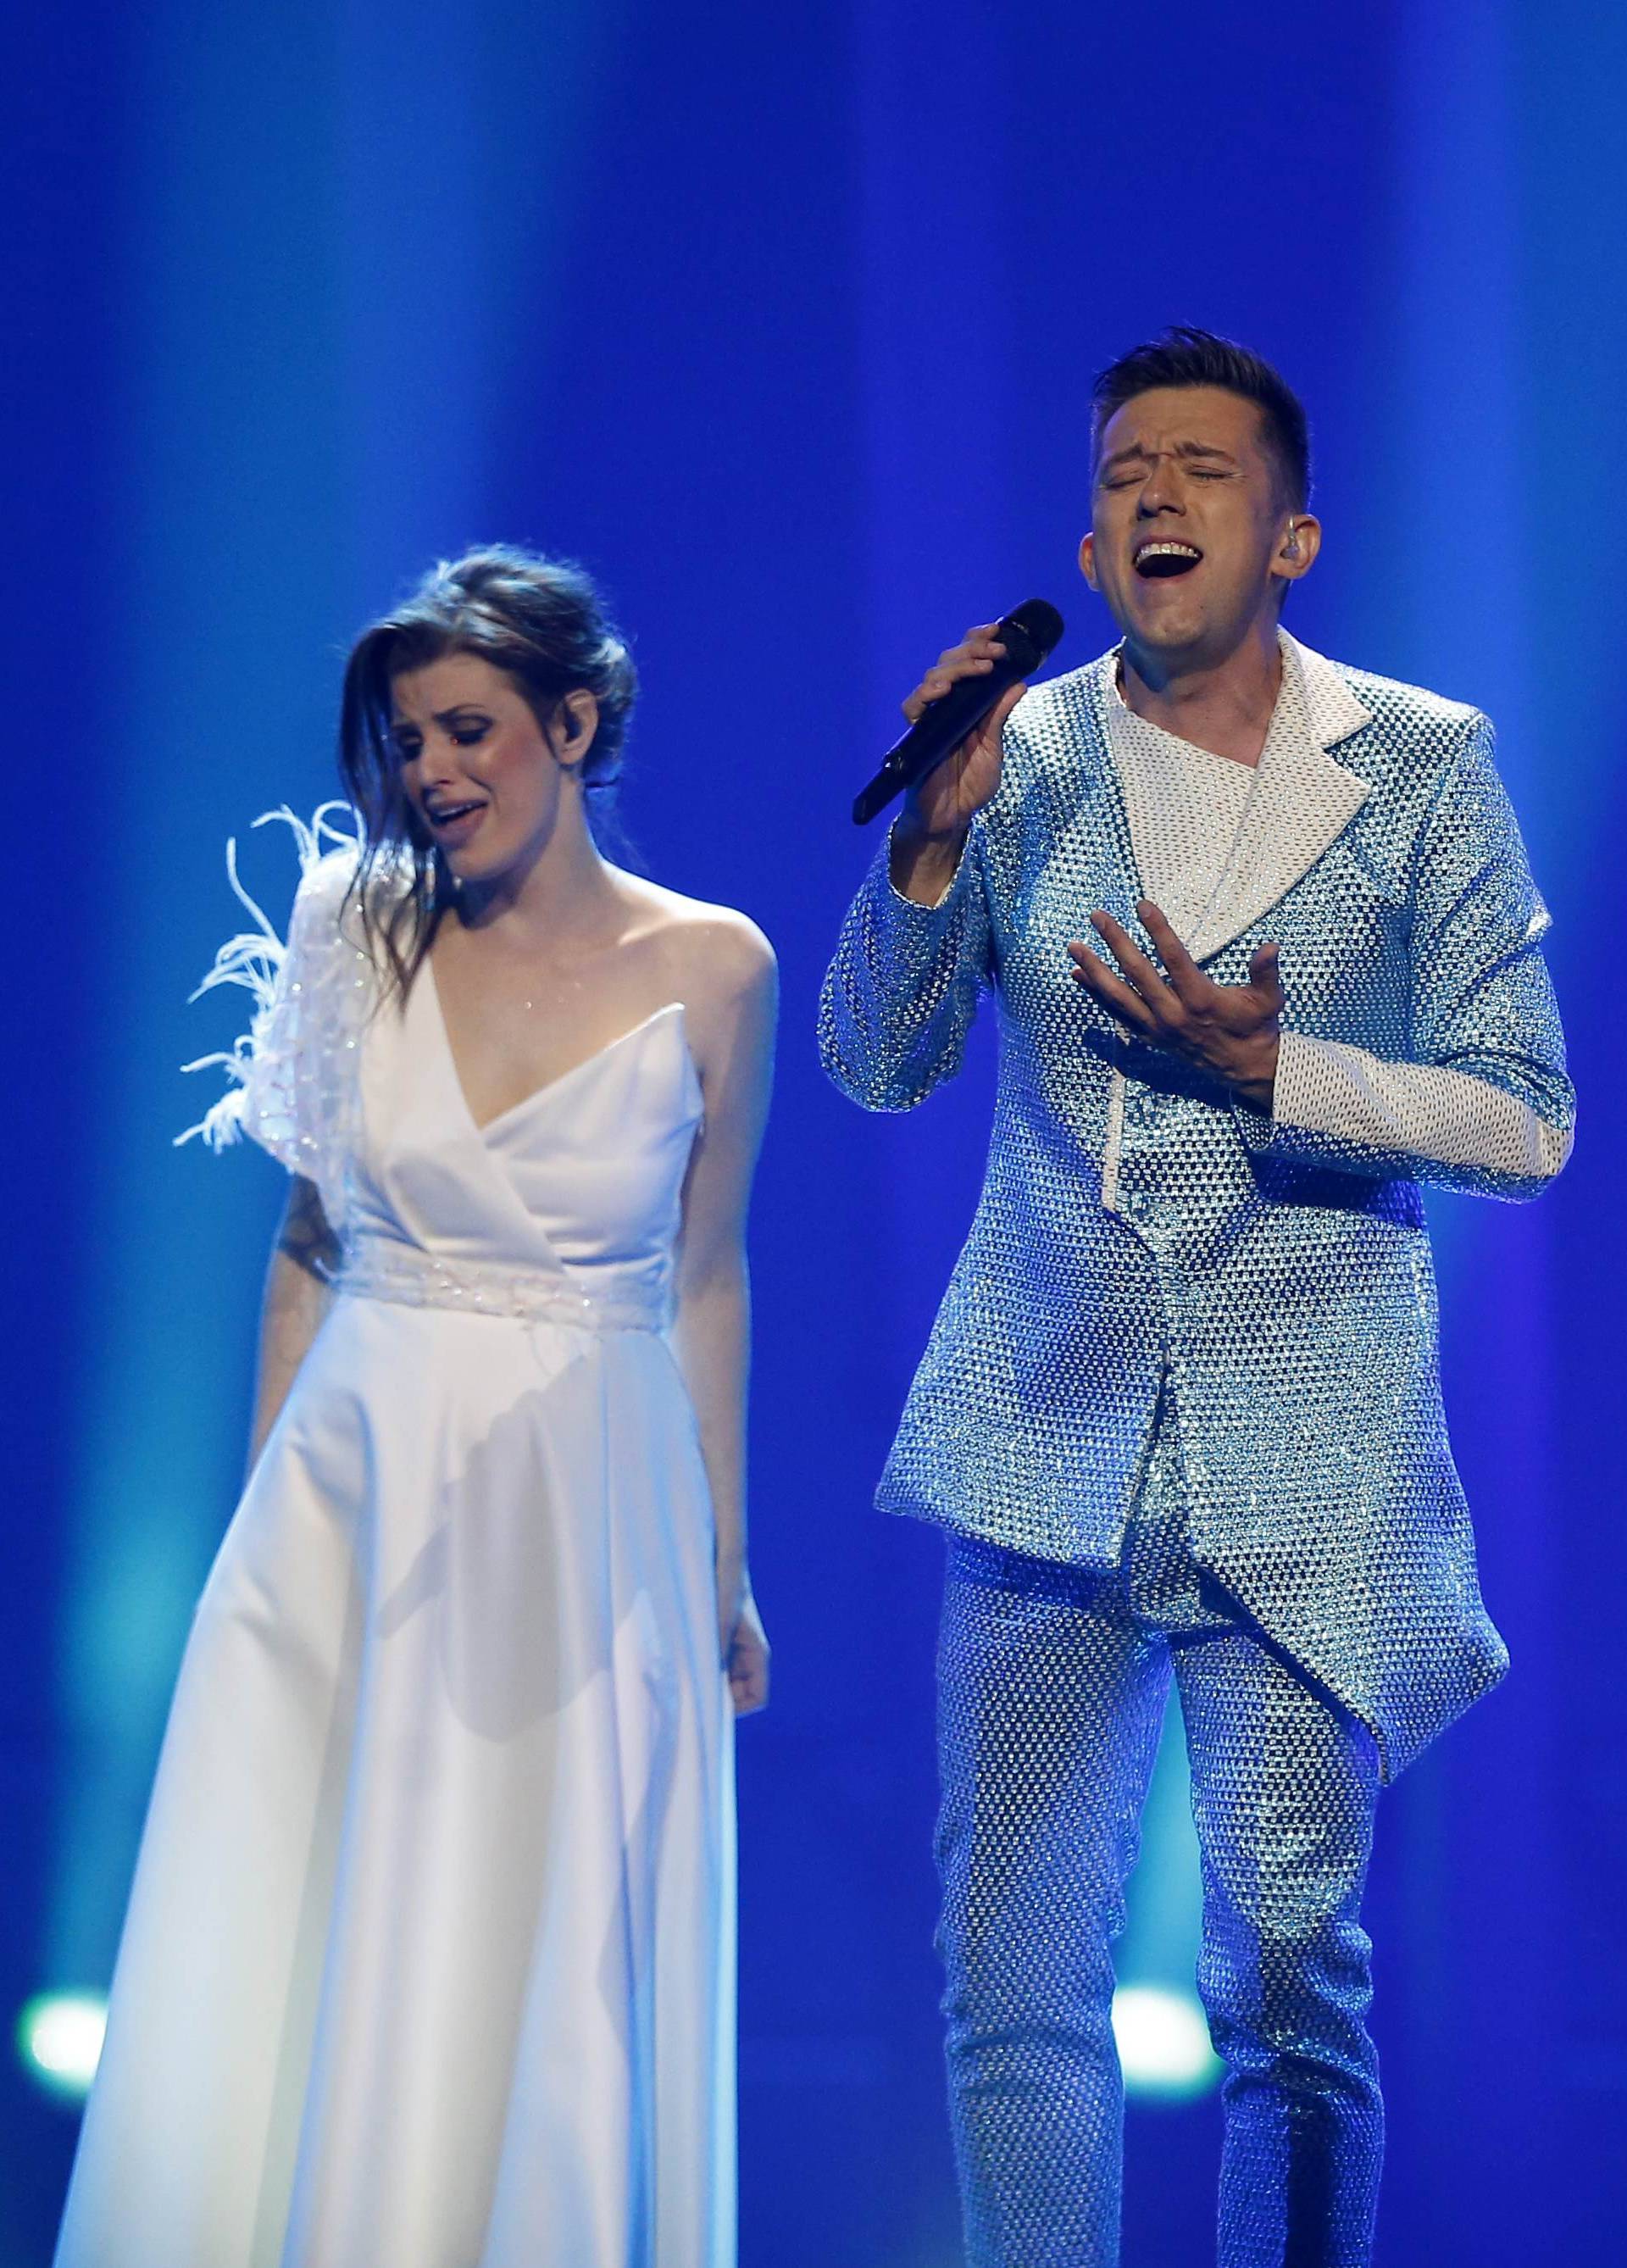 Montenegroâs Vanja Radovanovic performs âInjeâ during the Semi-Final 2 for Eurovision Song Contest 2018 in Lisbon